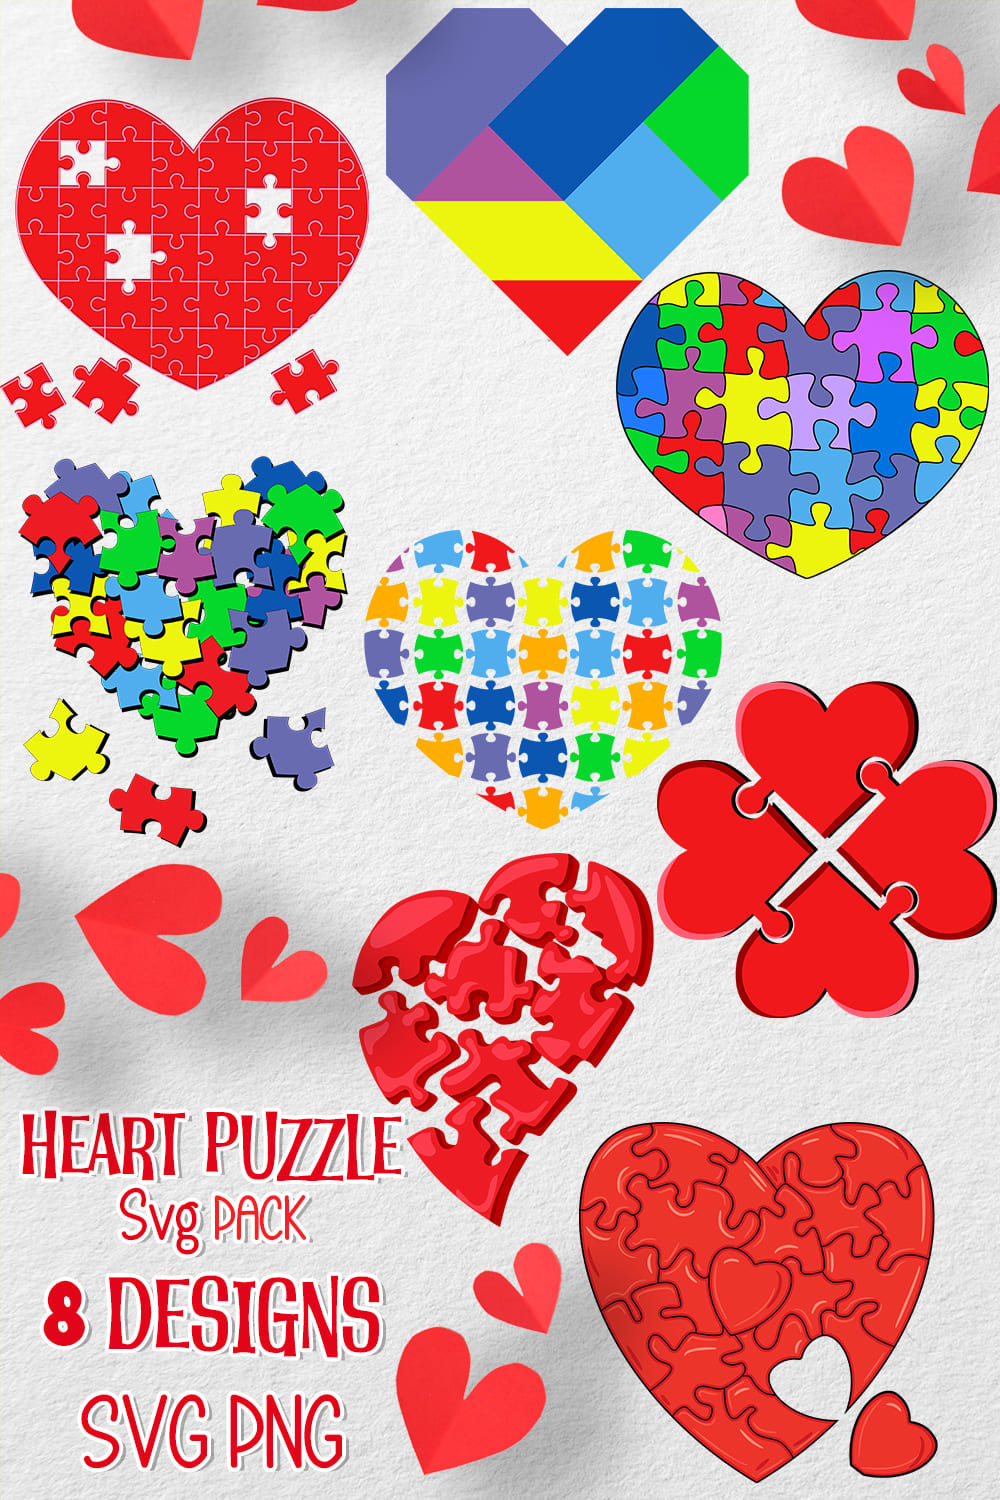 Heart puzzle svg - pinterest image preview.